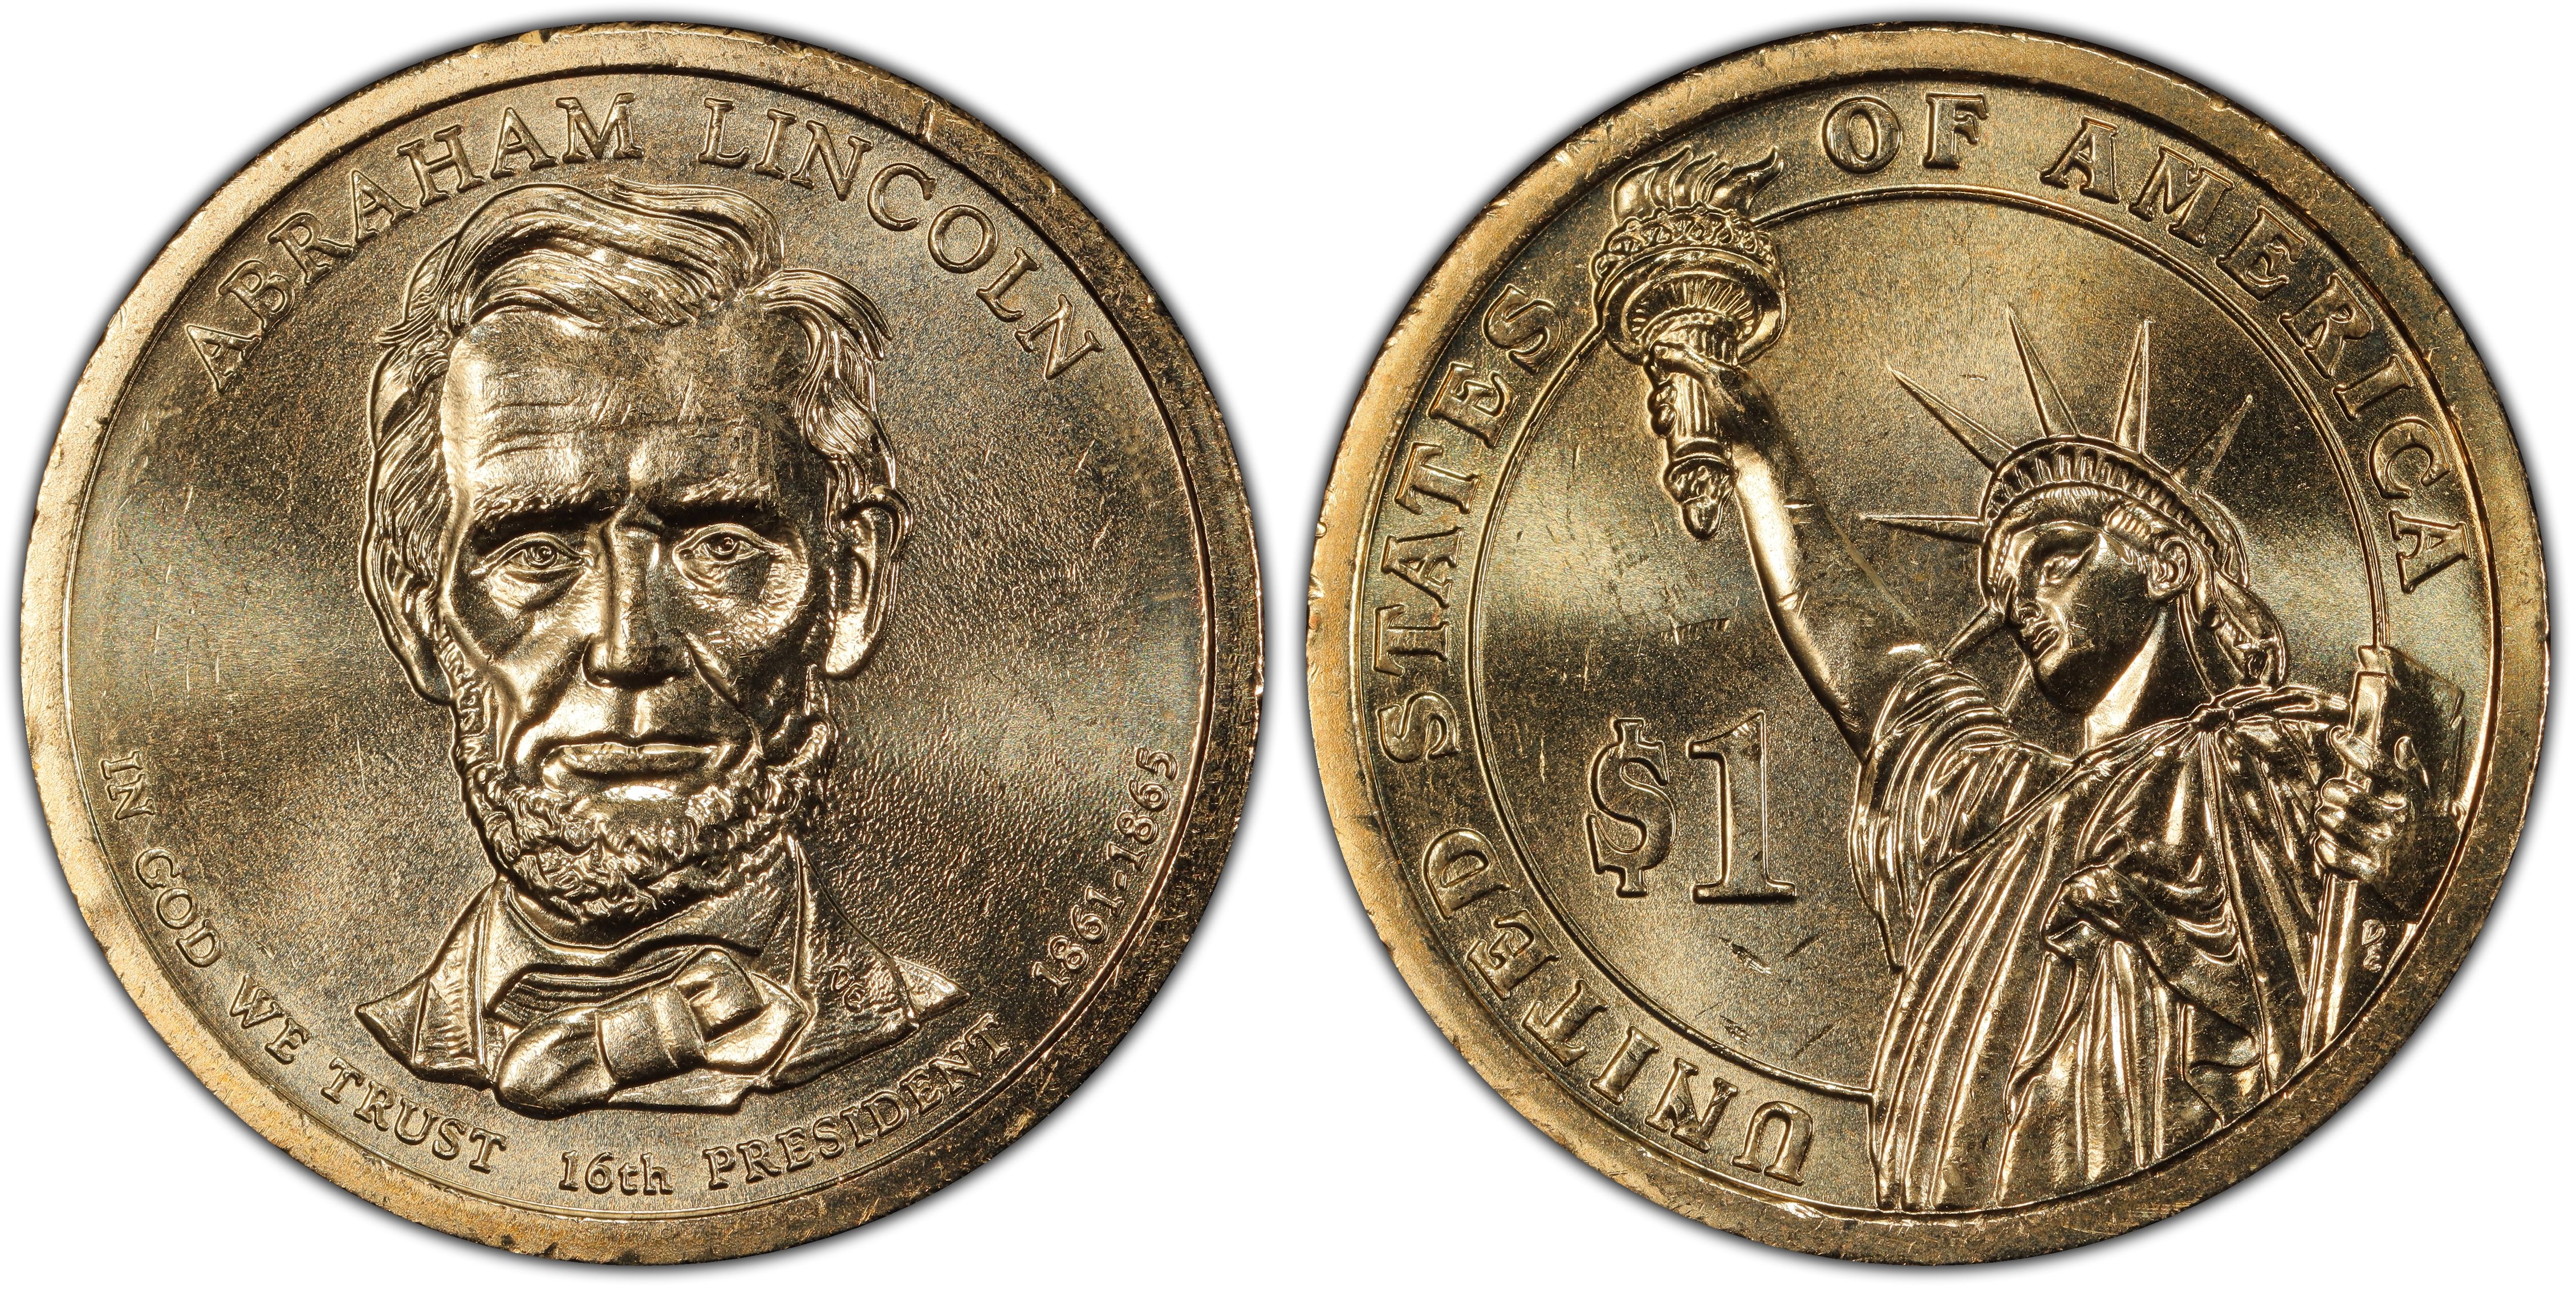 2010 D & P Abraham Lincoln Presidential Dollar Coins $1 Coins USD 